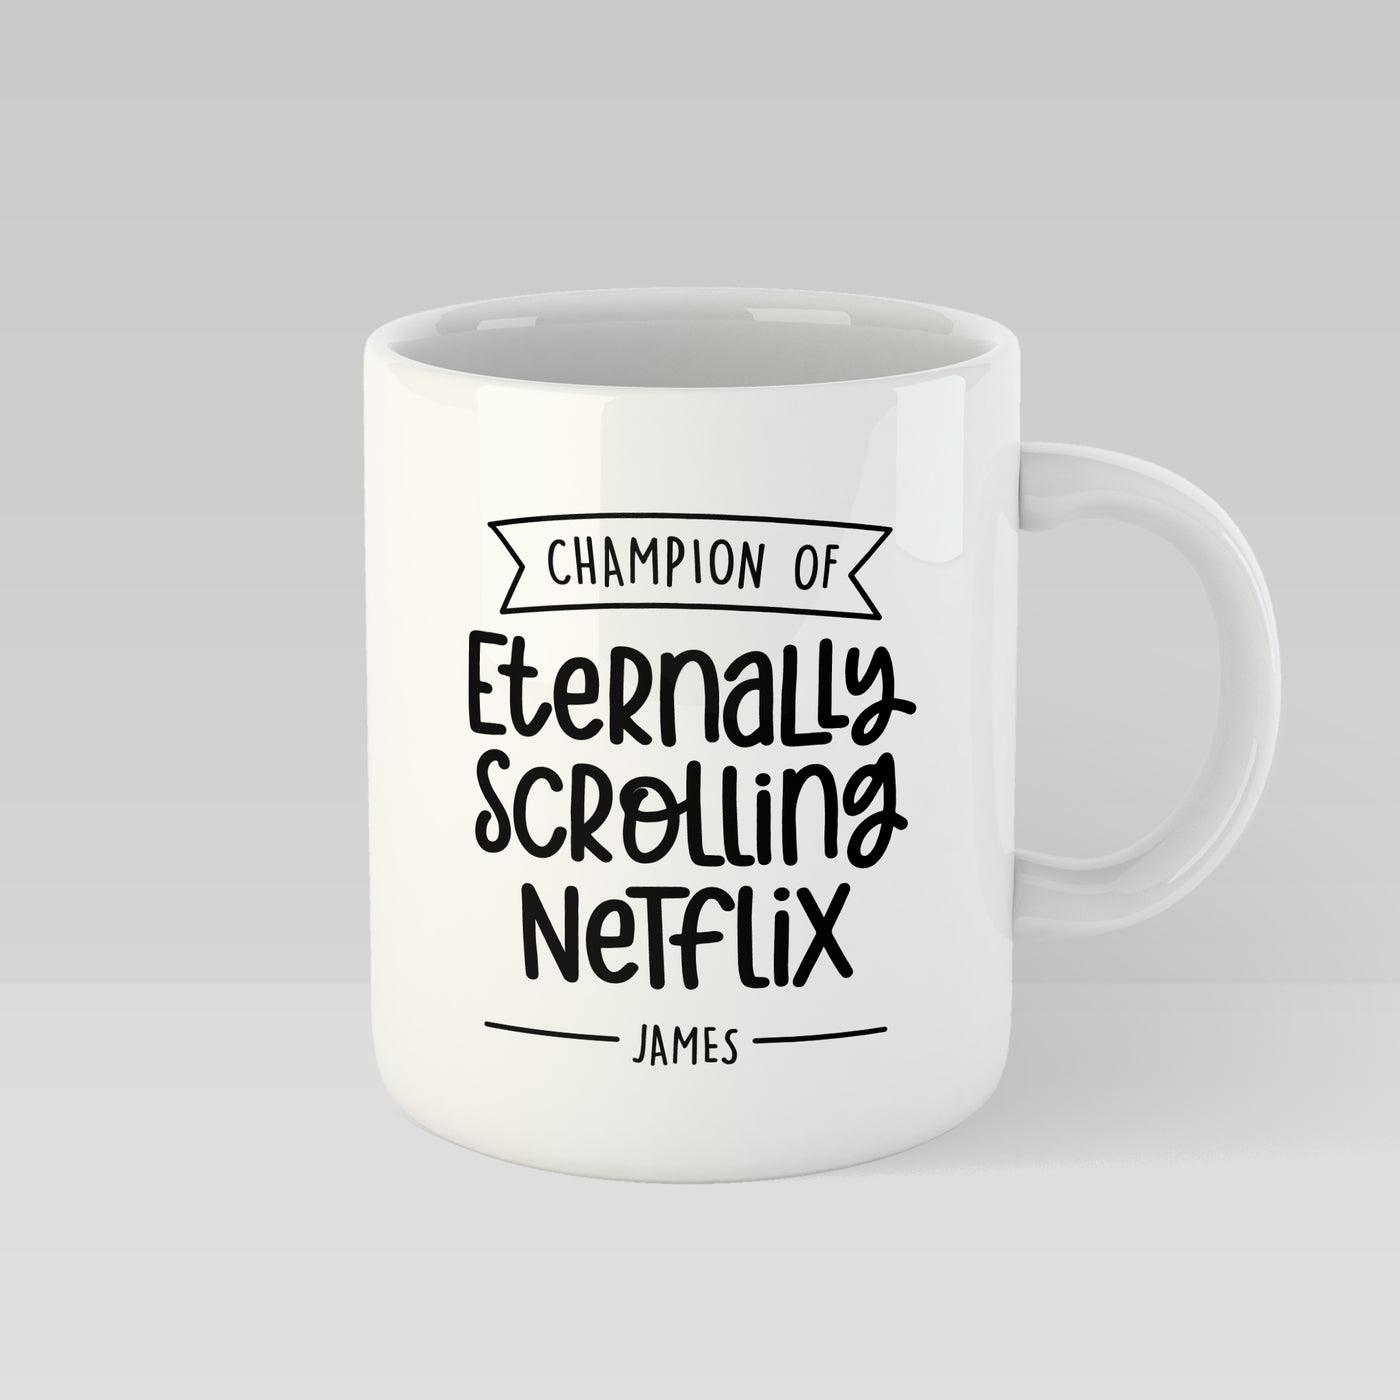 Champion of Eternally Scrolling Netflix Personalised Mug